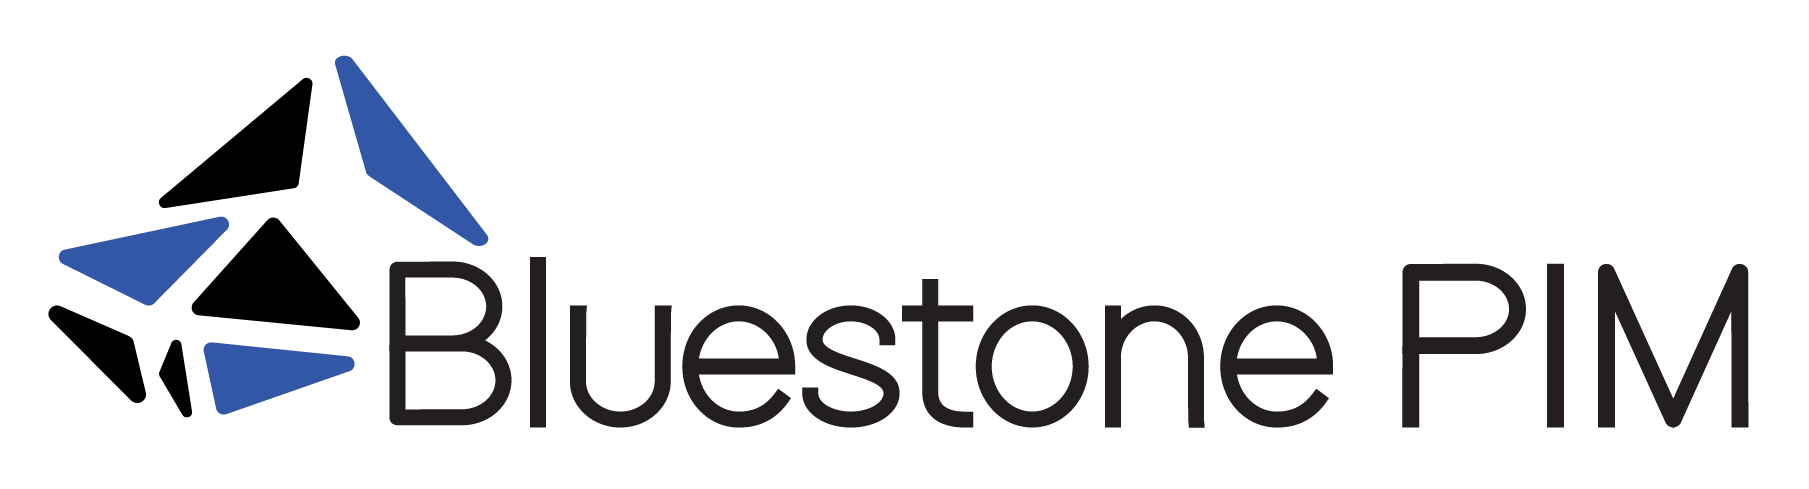 Bluestone PIM's logo.